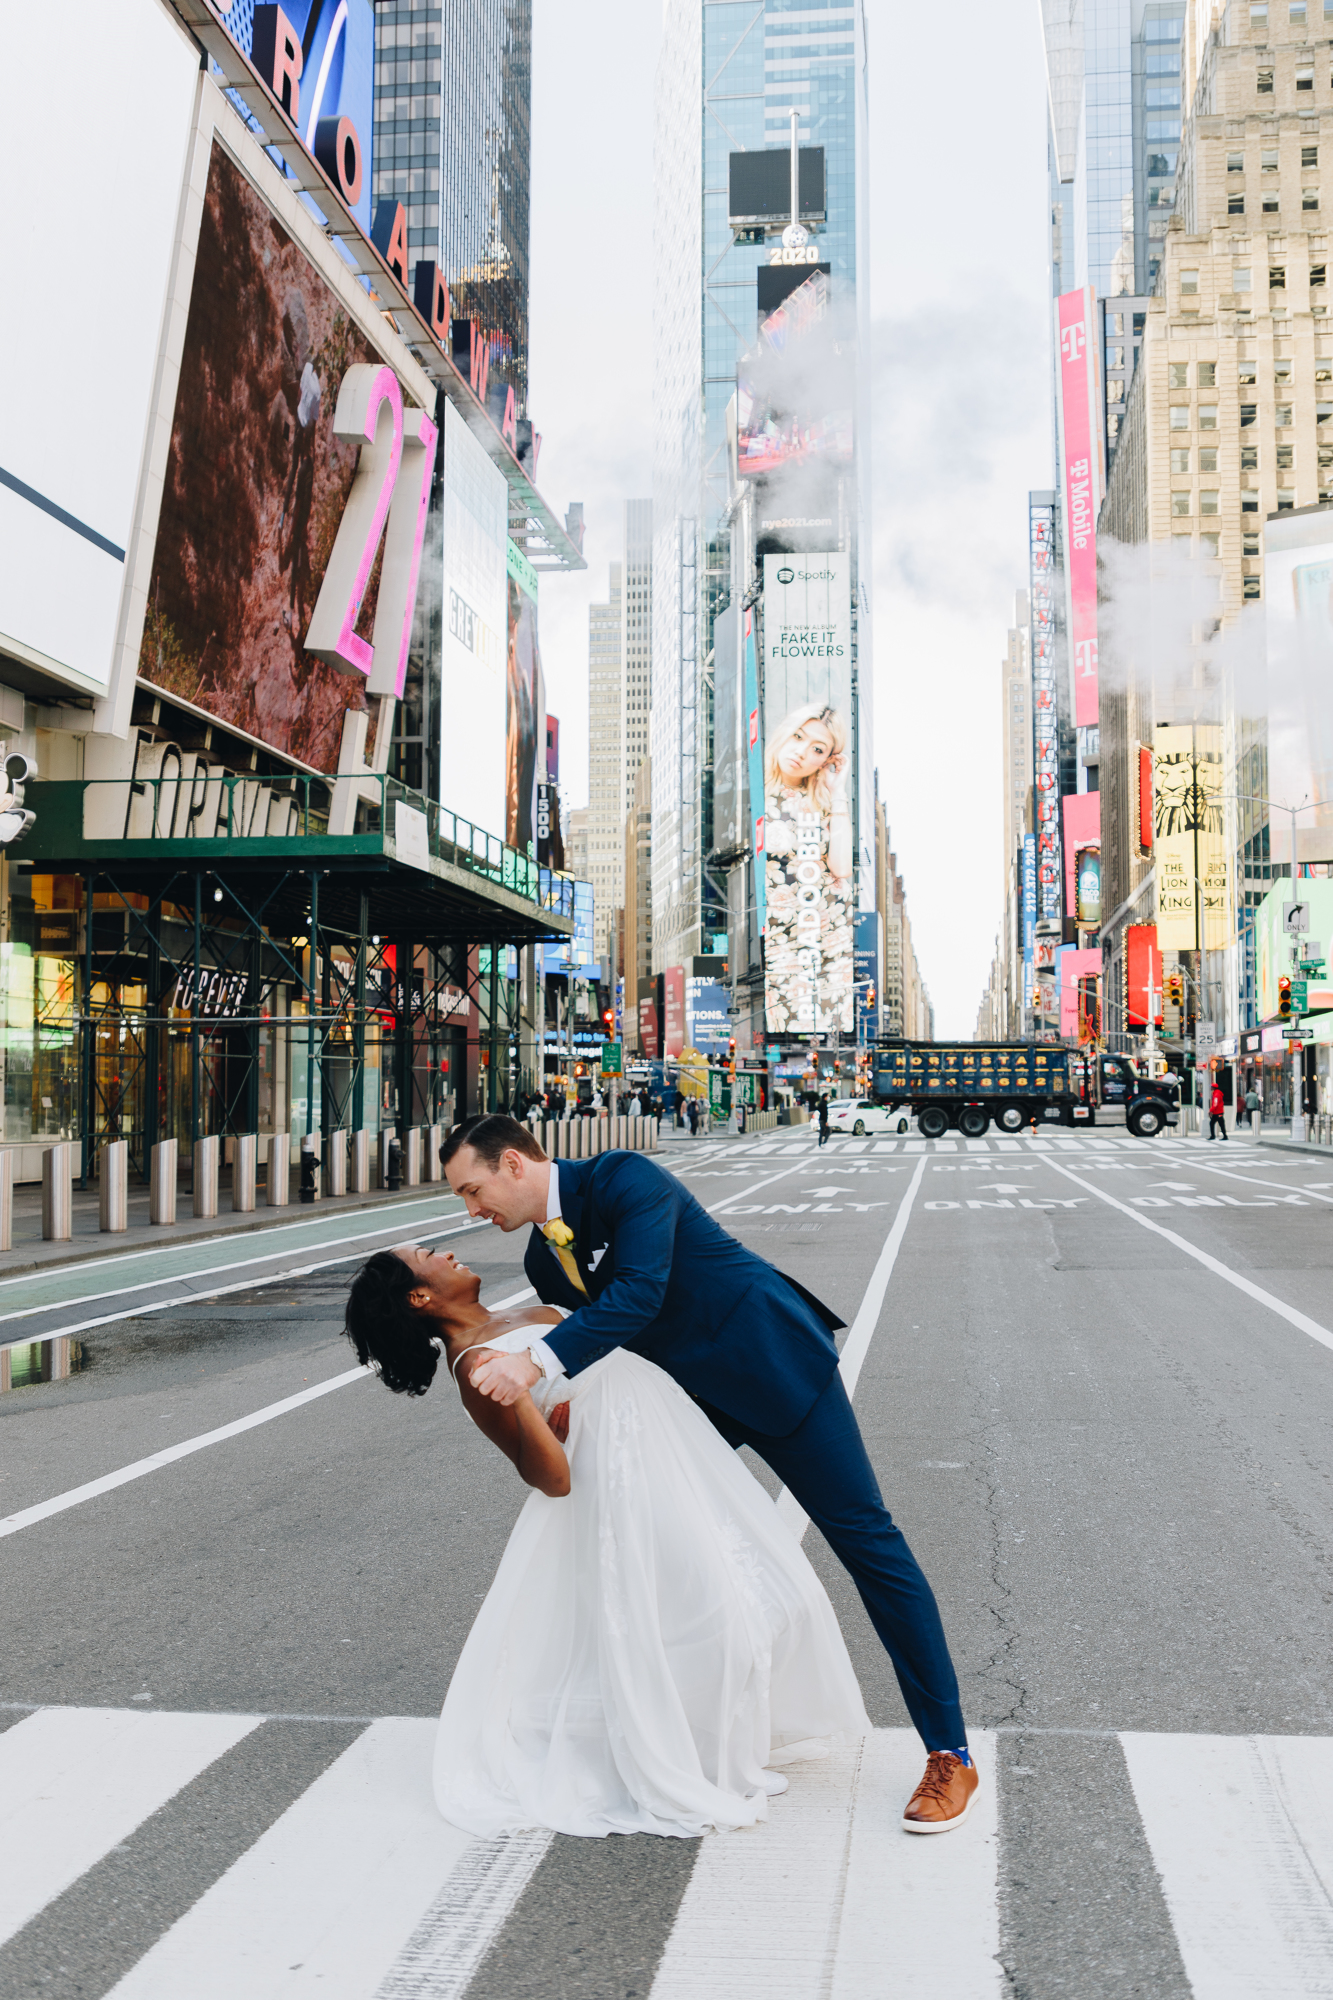 Beautiful Times Square wedding photos